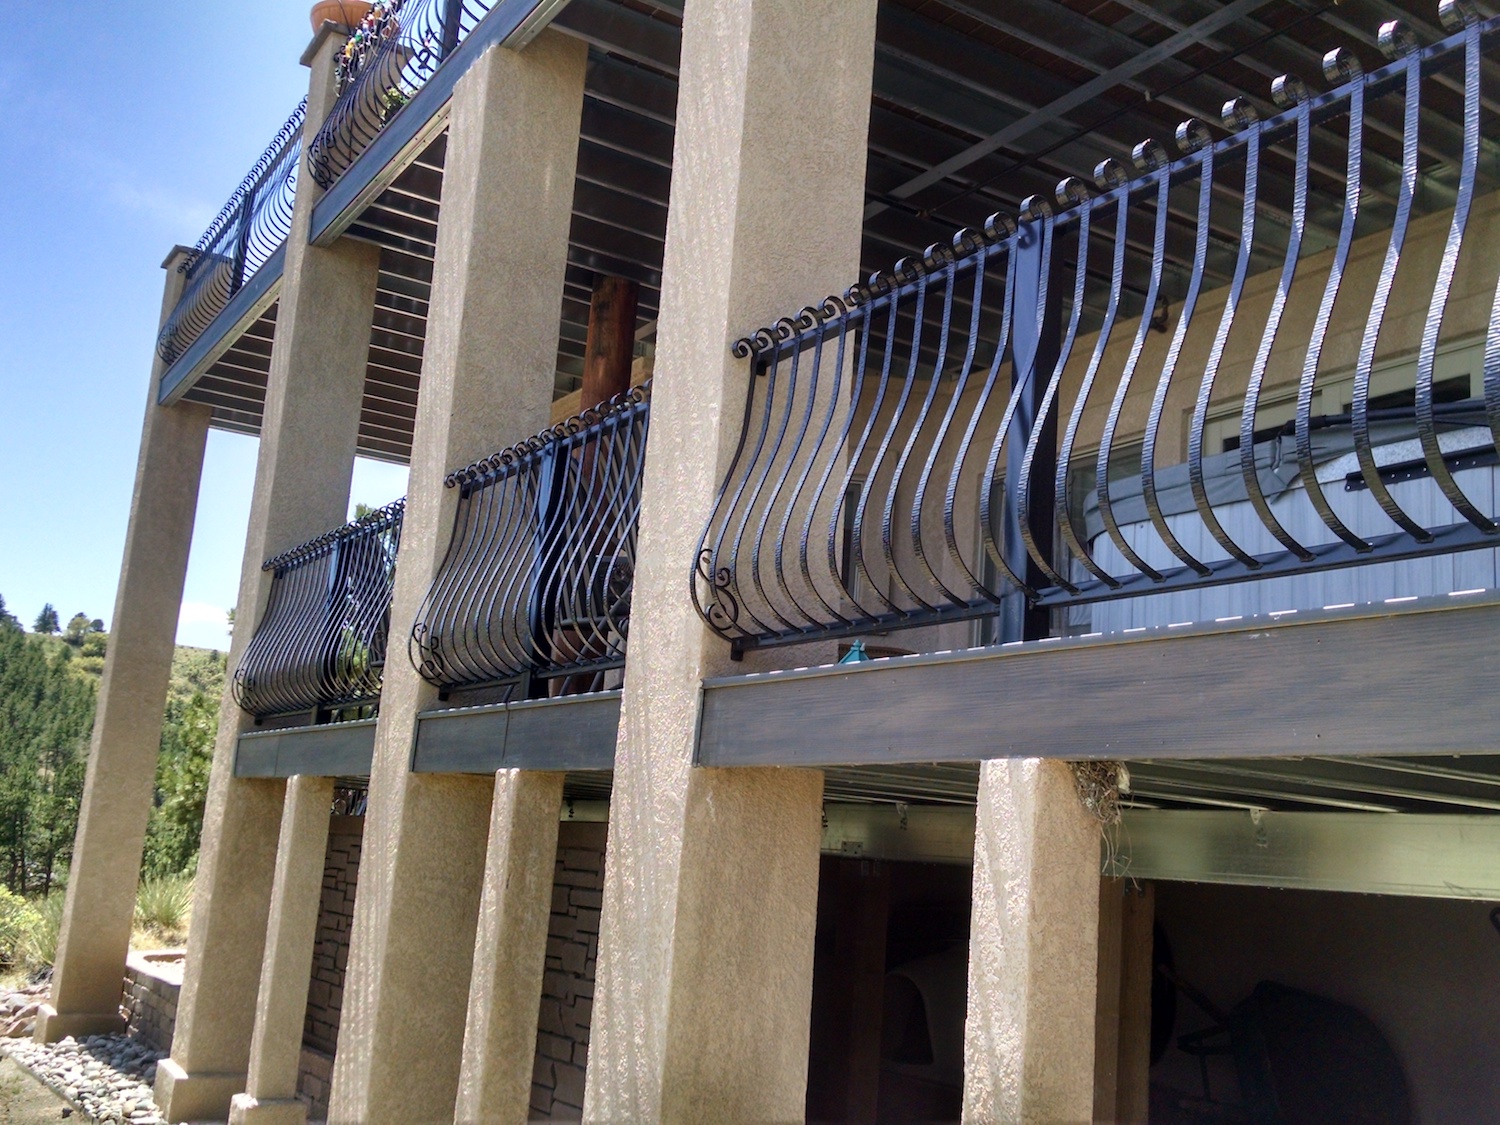 Custom designed wrought iron railing installed on composite deck